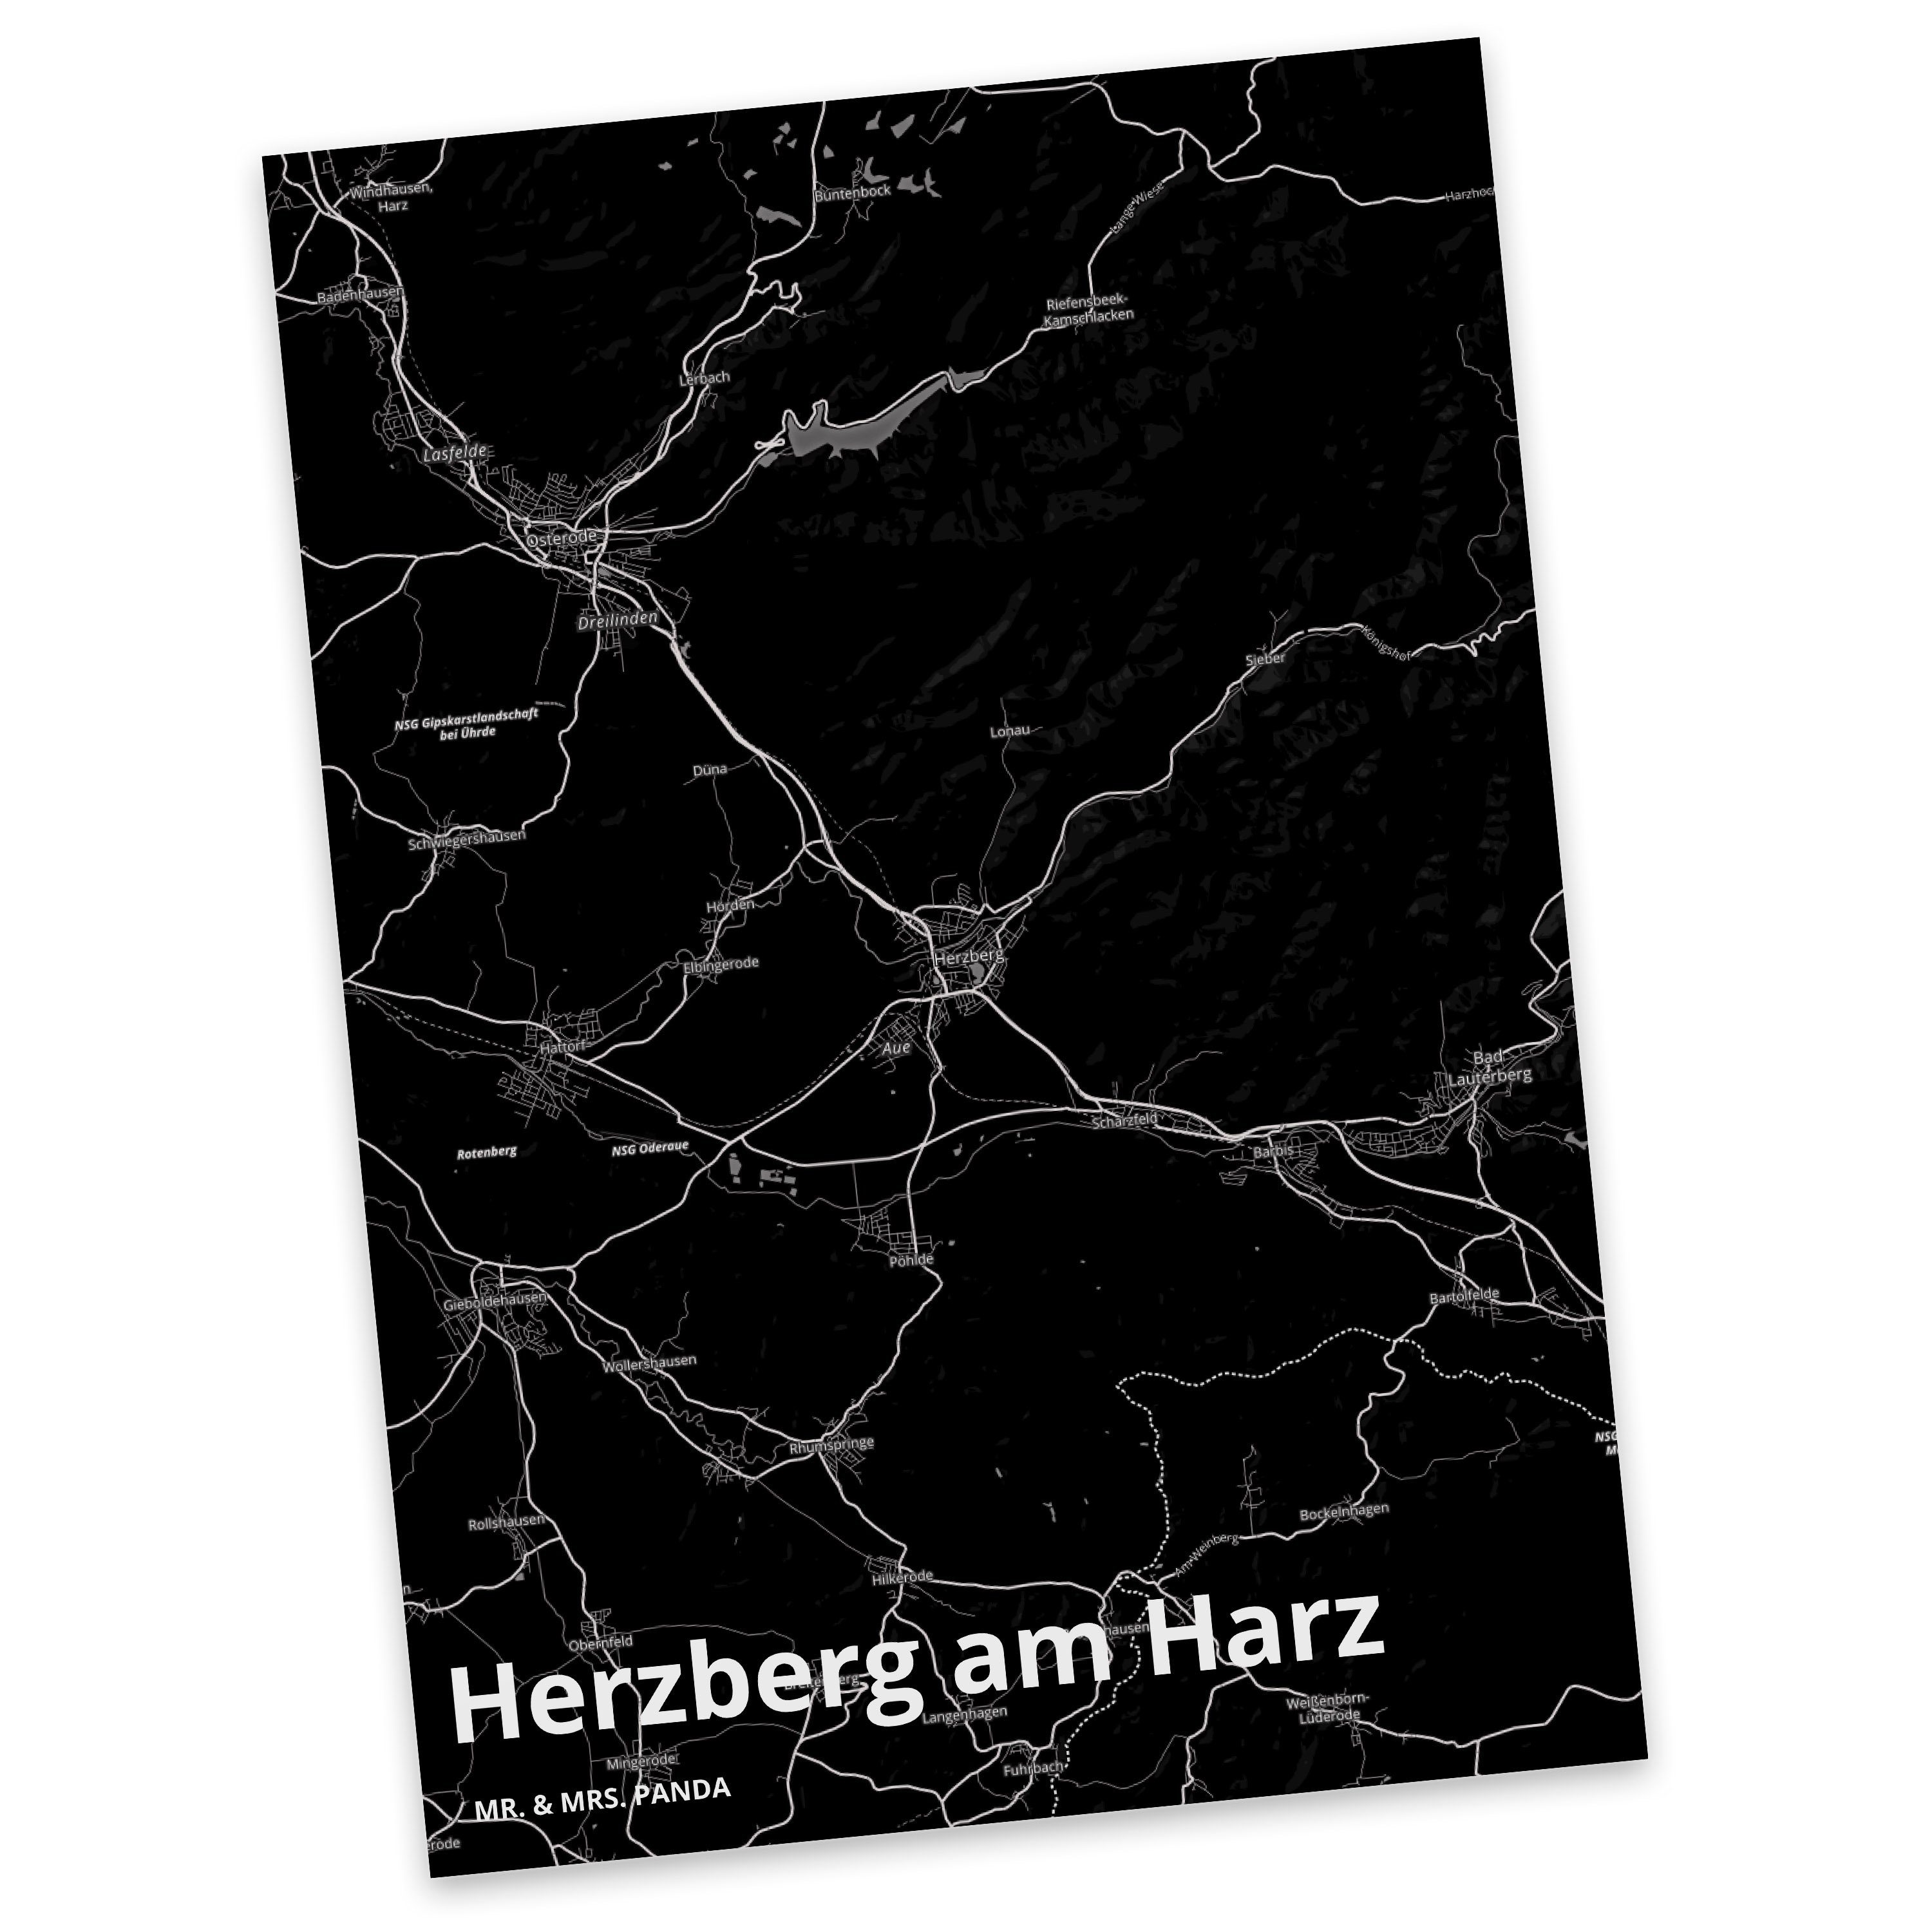 Mr. & Mrs. Panda Postkarte Herzberg am Harz - Geschenk, Karte, Stadt Dorf Karte Landkarte Map St